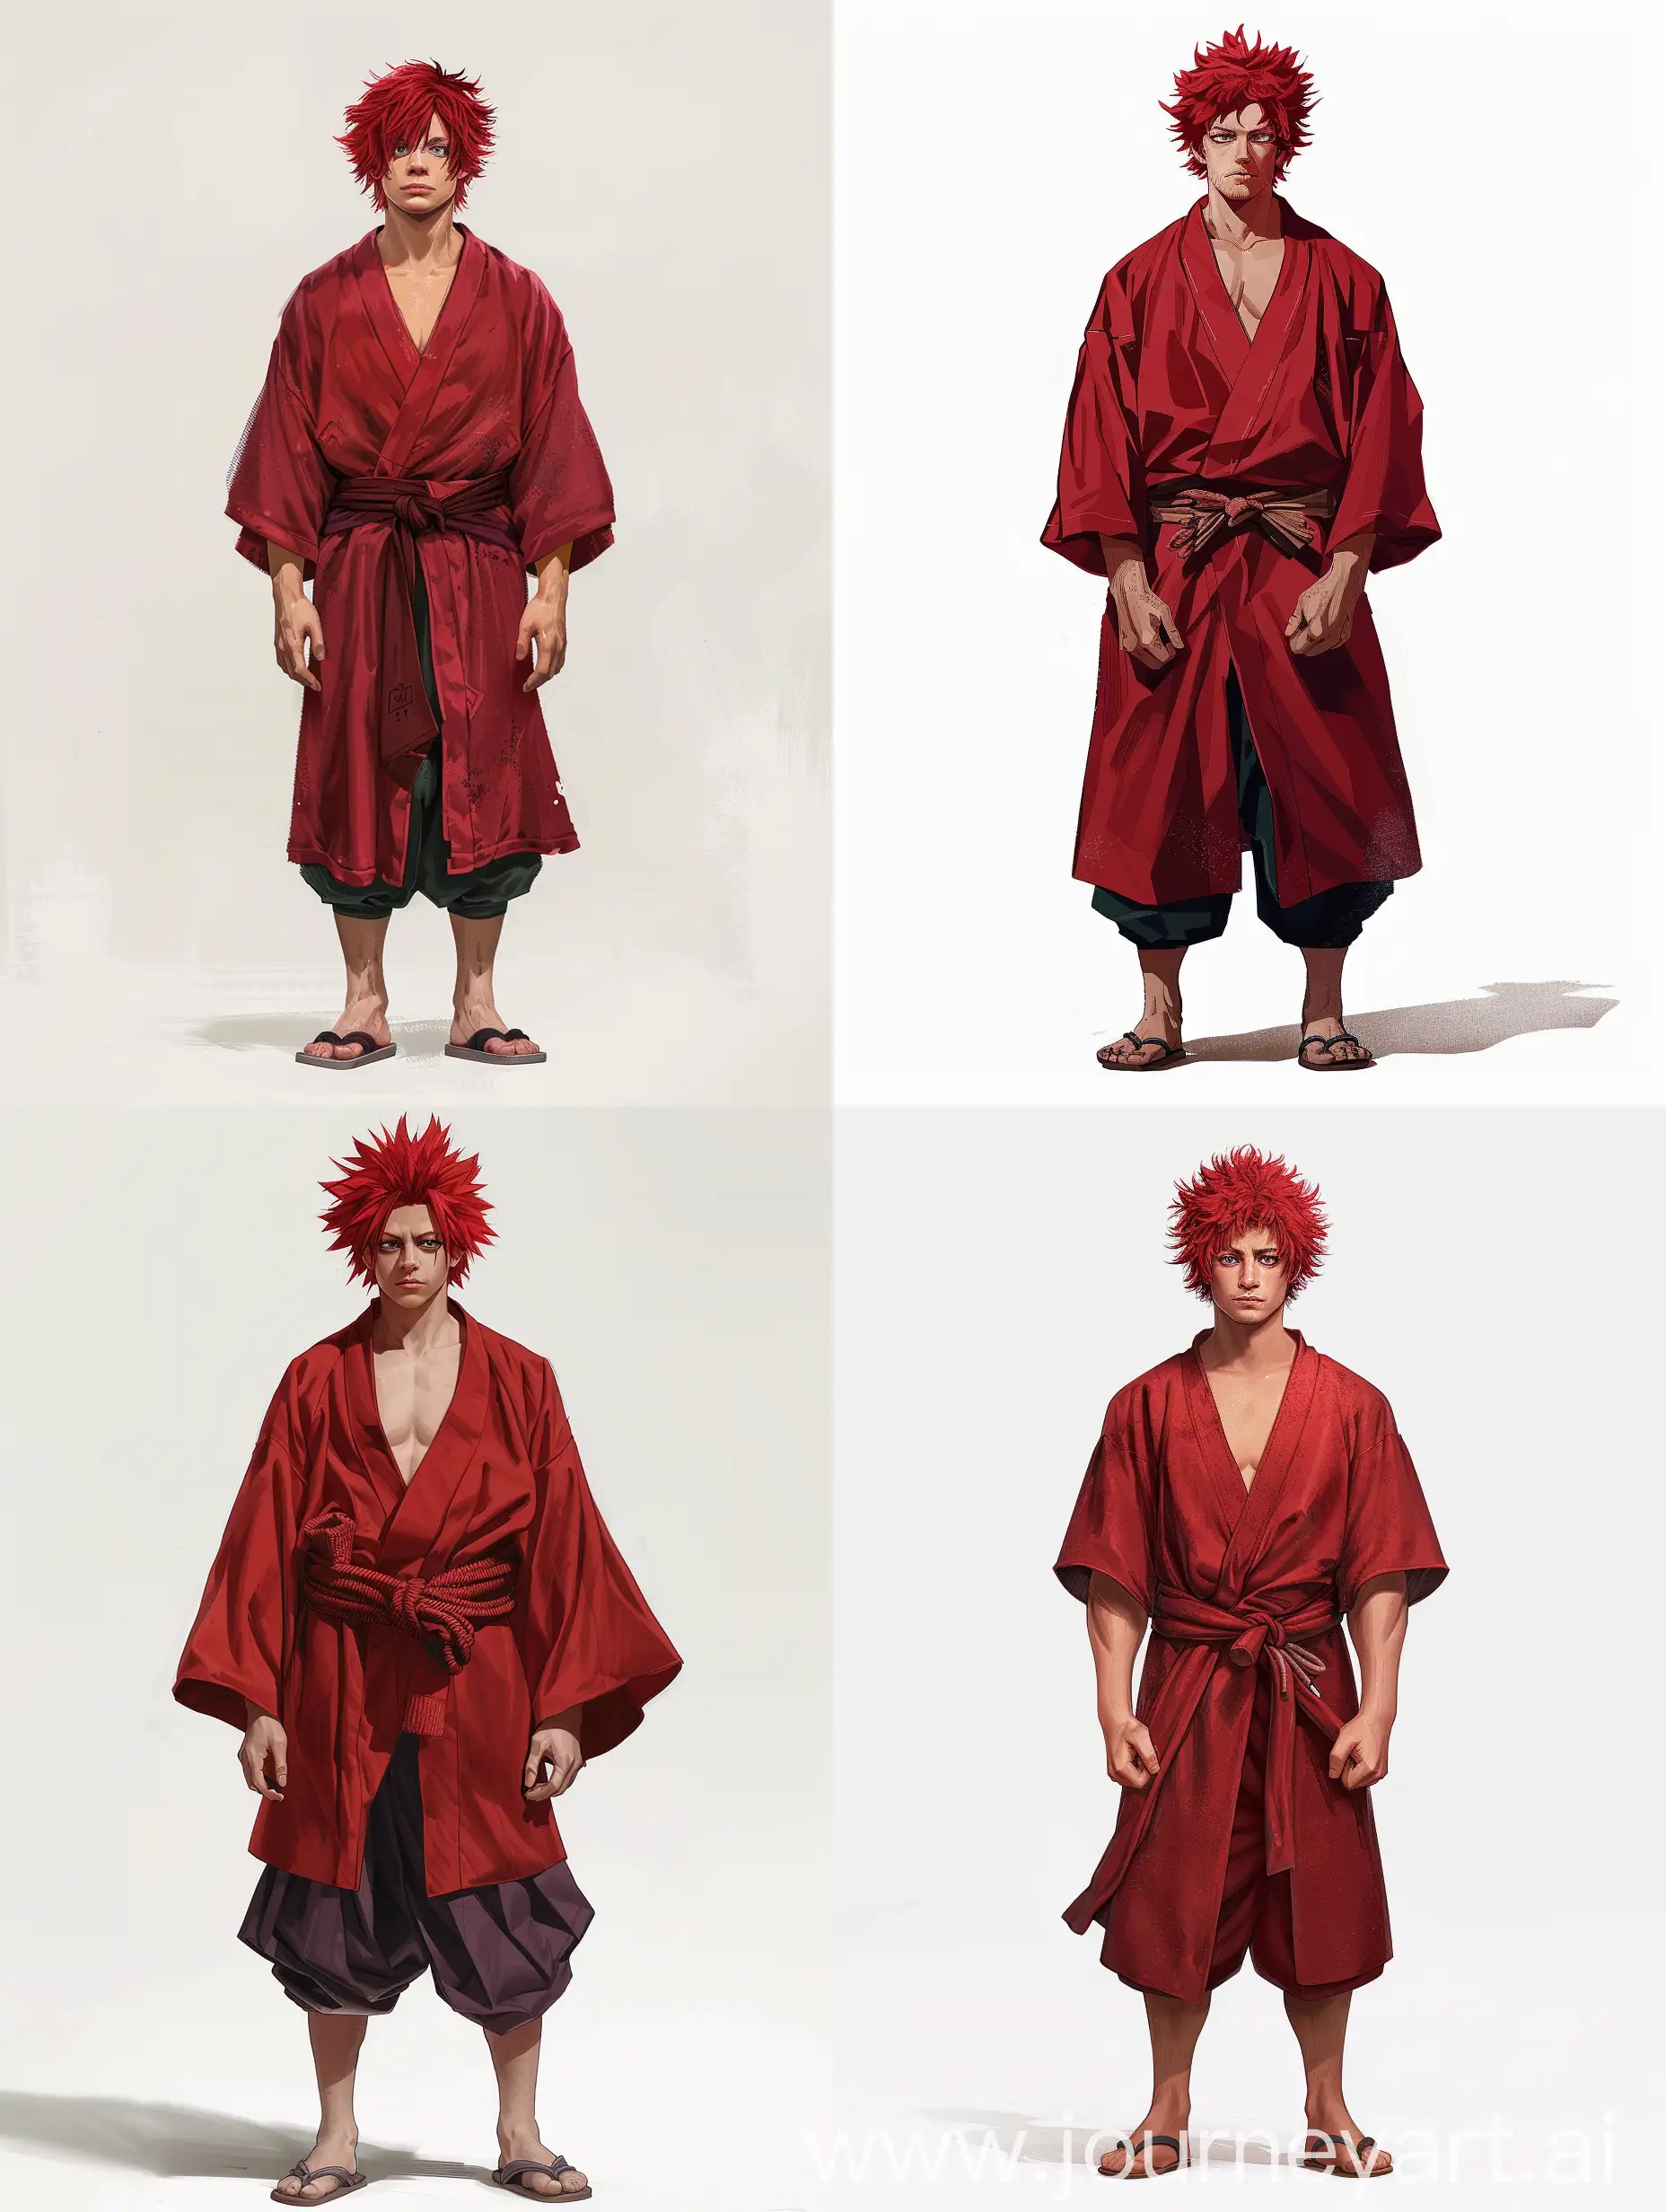 RedHaired-Man-in-My-Hero-Academia-School-Robes-Portrait